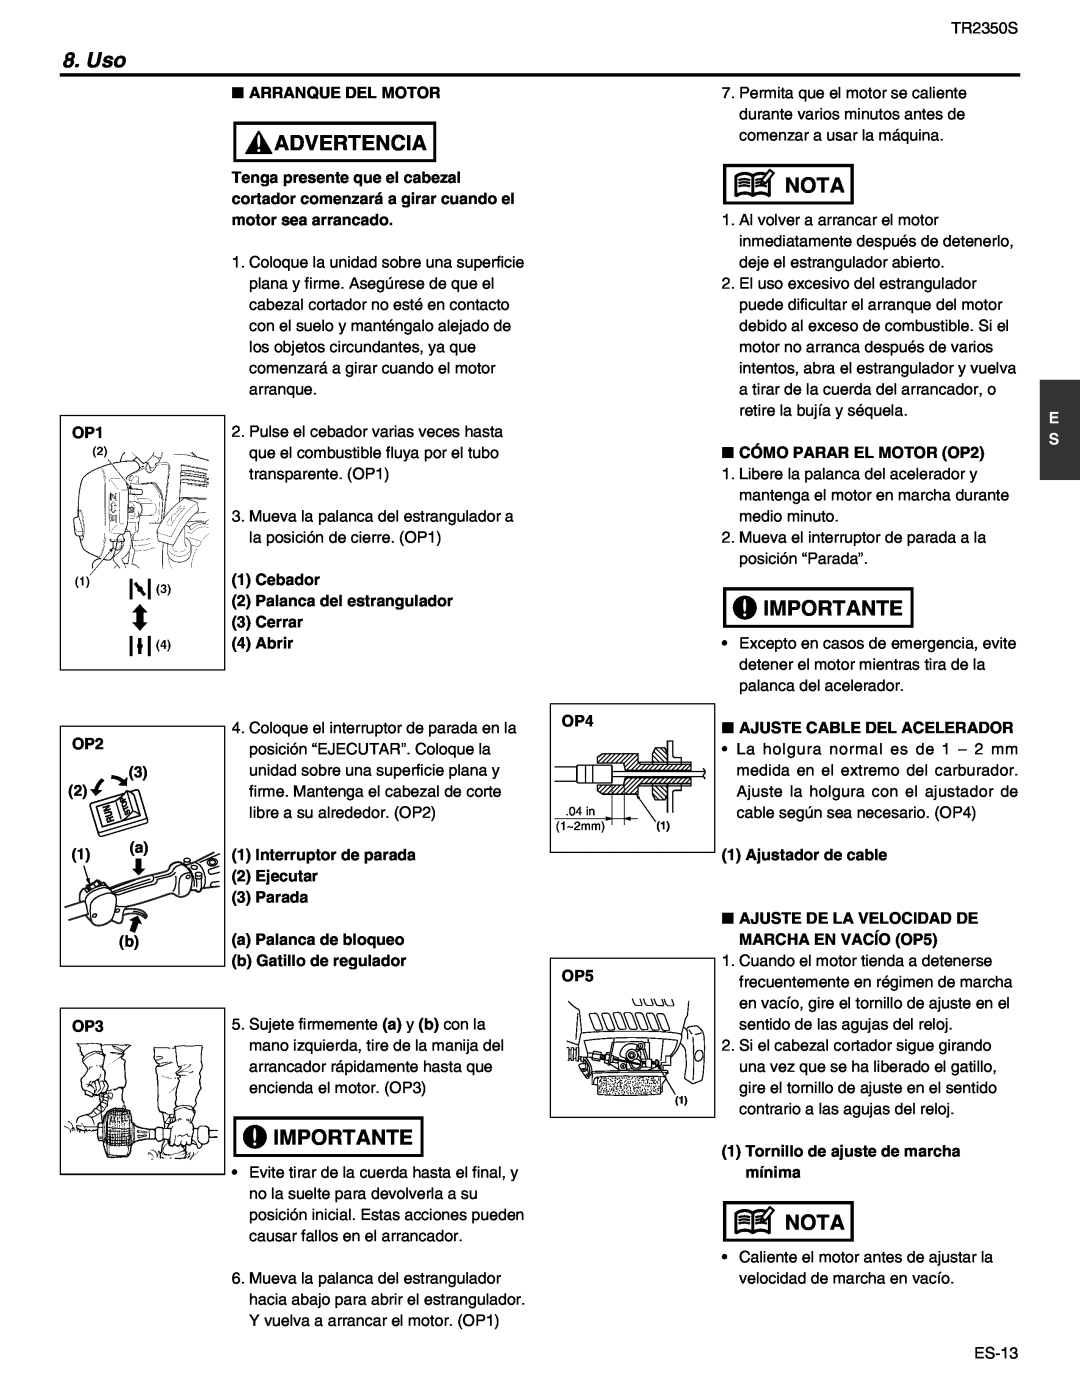 RedMax TR2350S manual Uso, Advertencia, Nota, Importante 